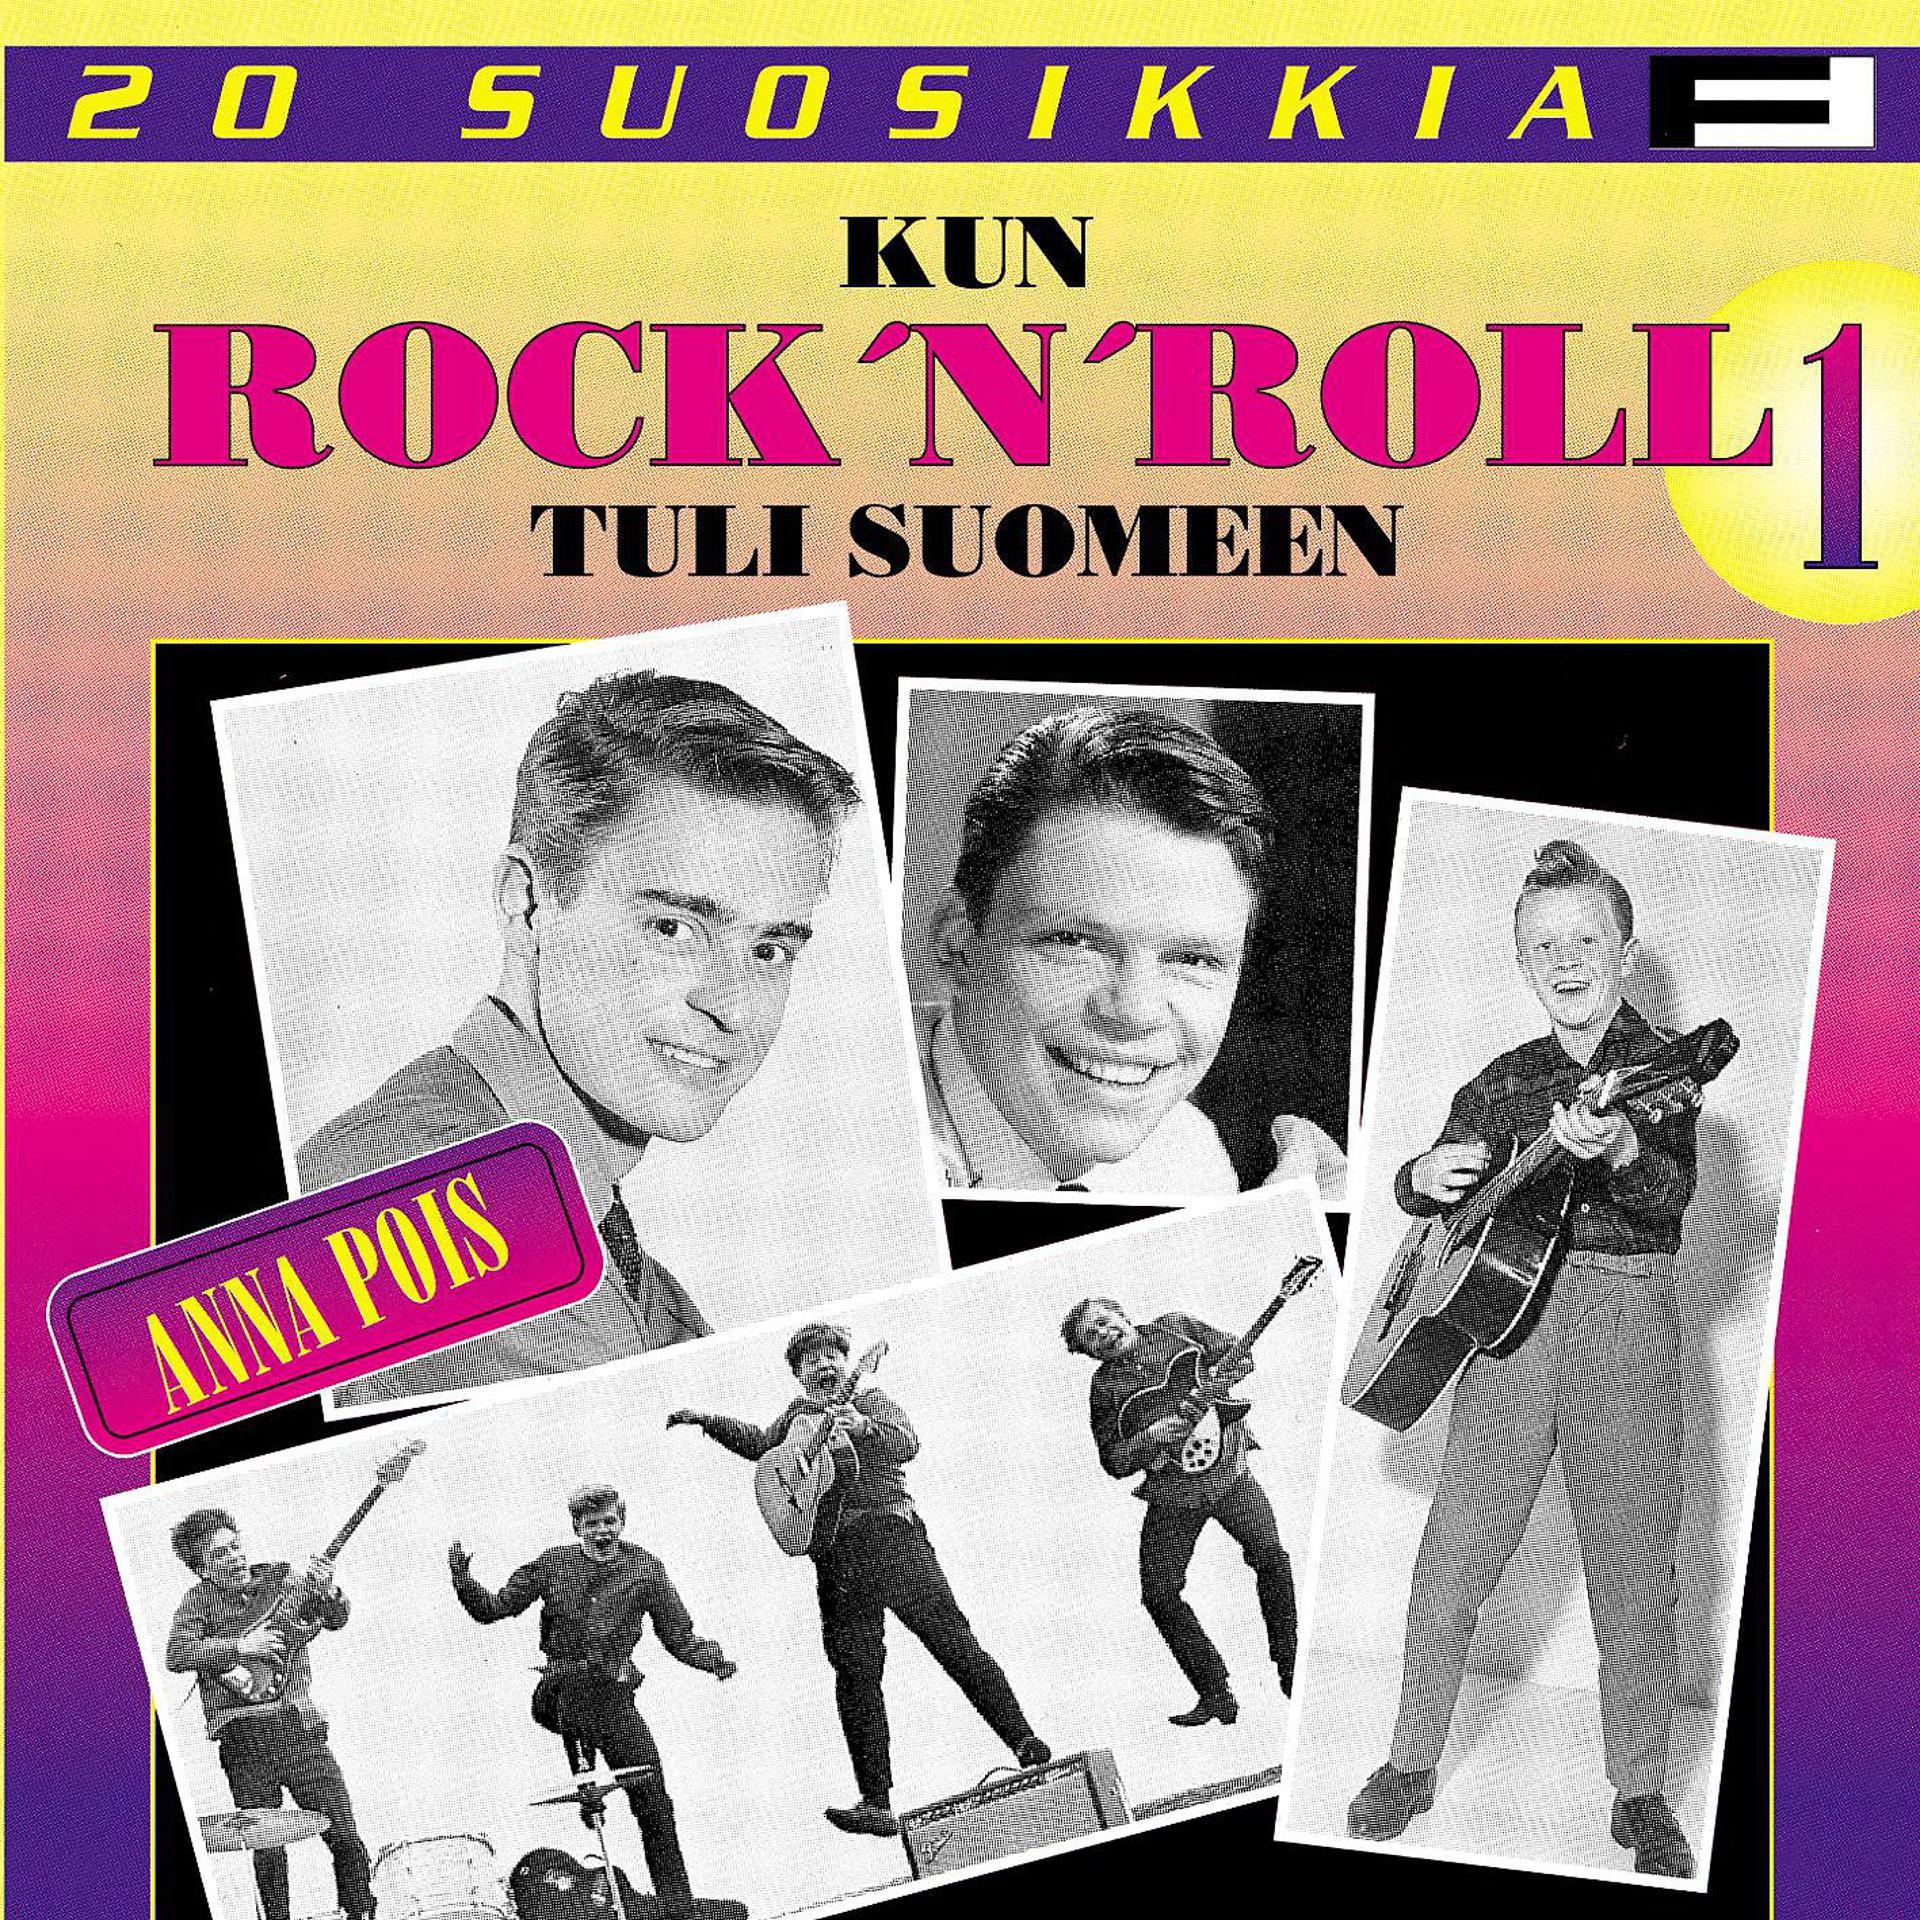 Постер альбома 20 Suosikkia / Kun Rock'n Roll tuli Suomeen 1 / Anna pois